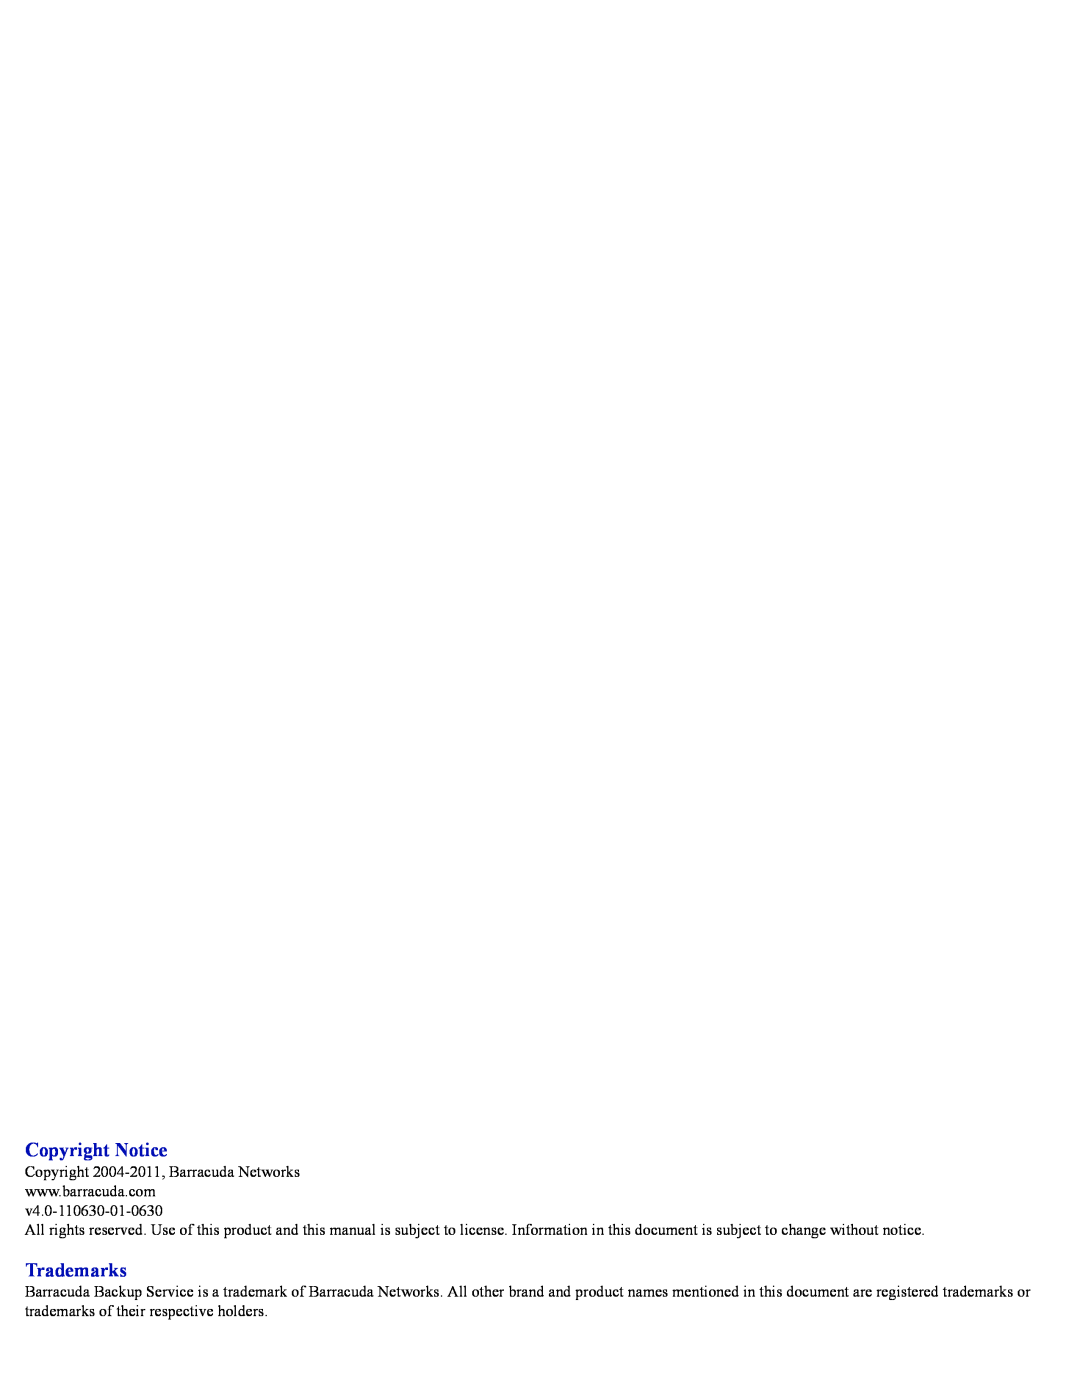 Barracuda Networks 4 manual Copyright Notice, Trademarks 